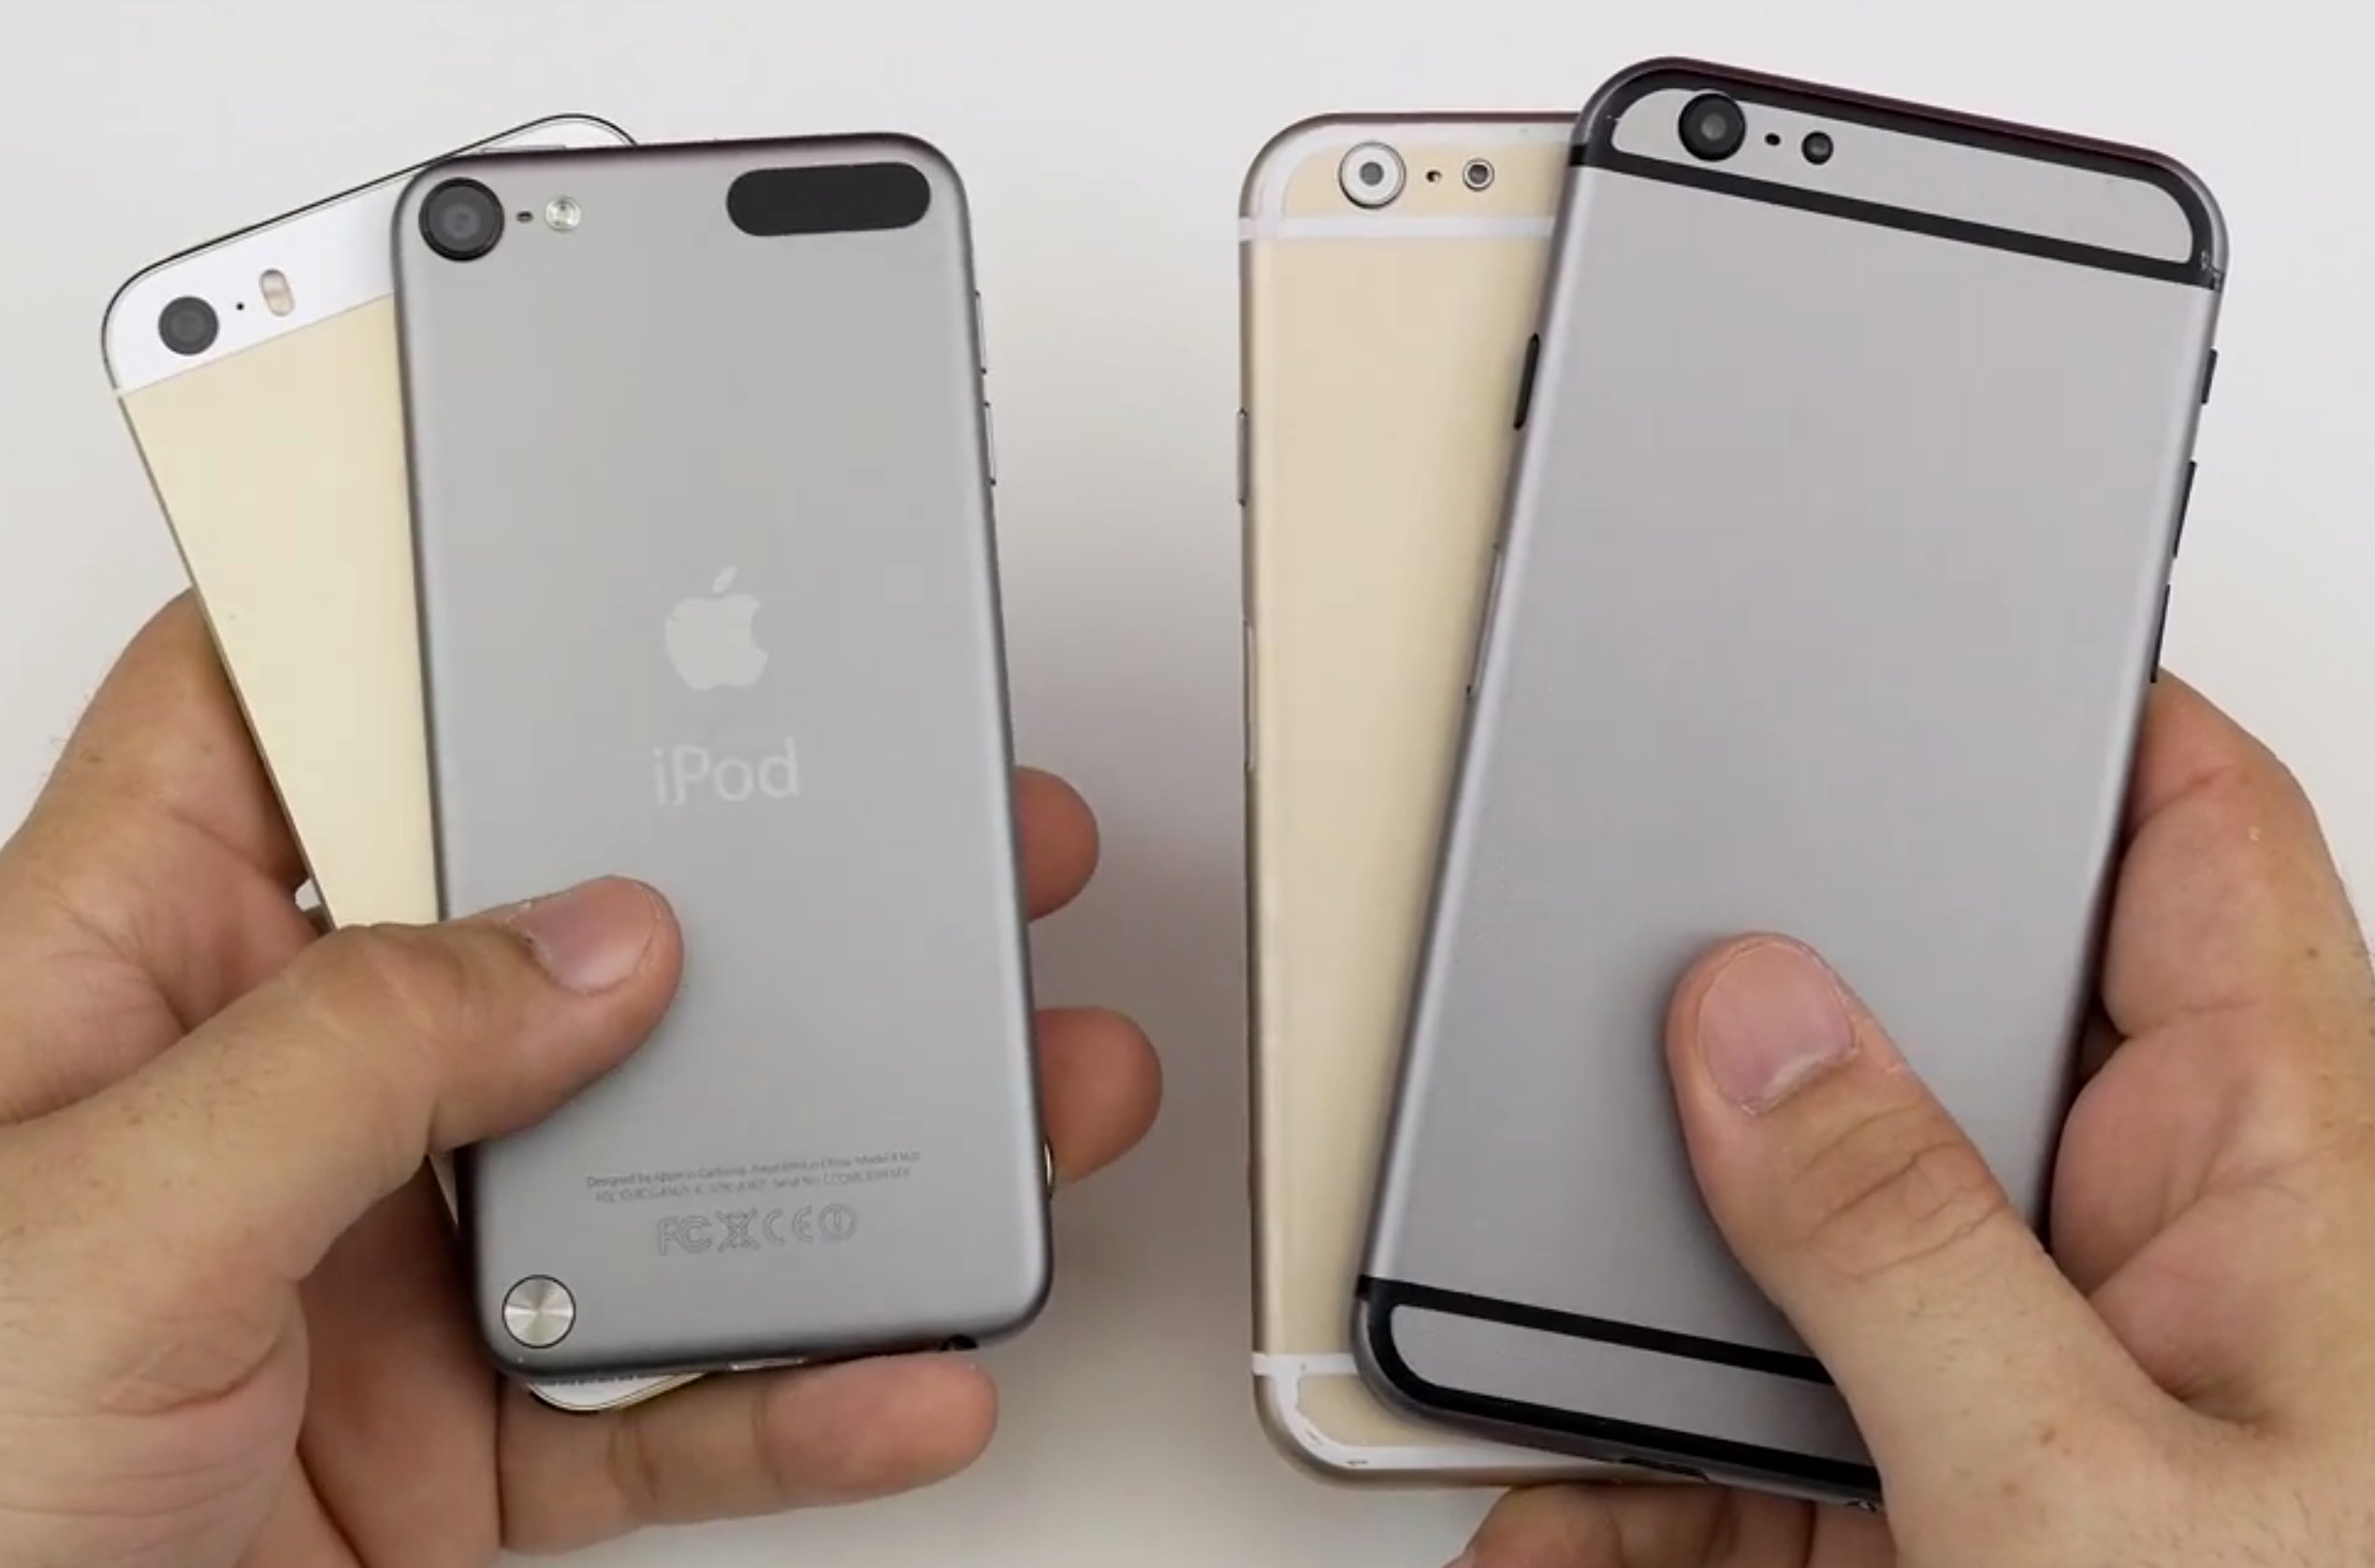 Vergleich: iPhone 6, iPhone 5s vs. Banane, gold vs. spacegrau 1